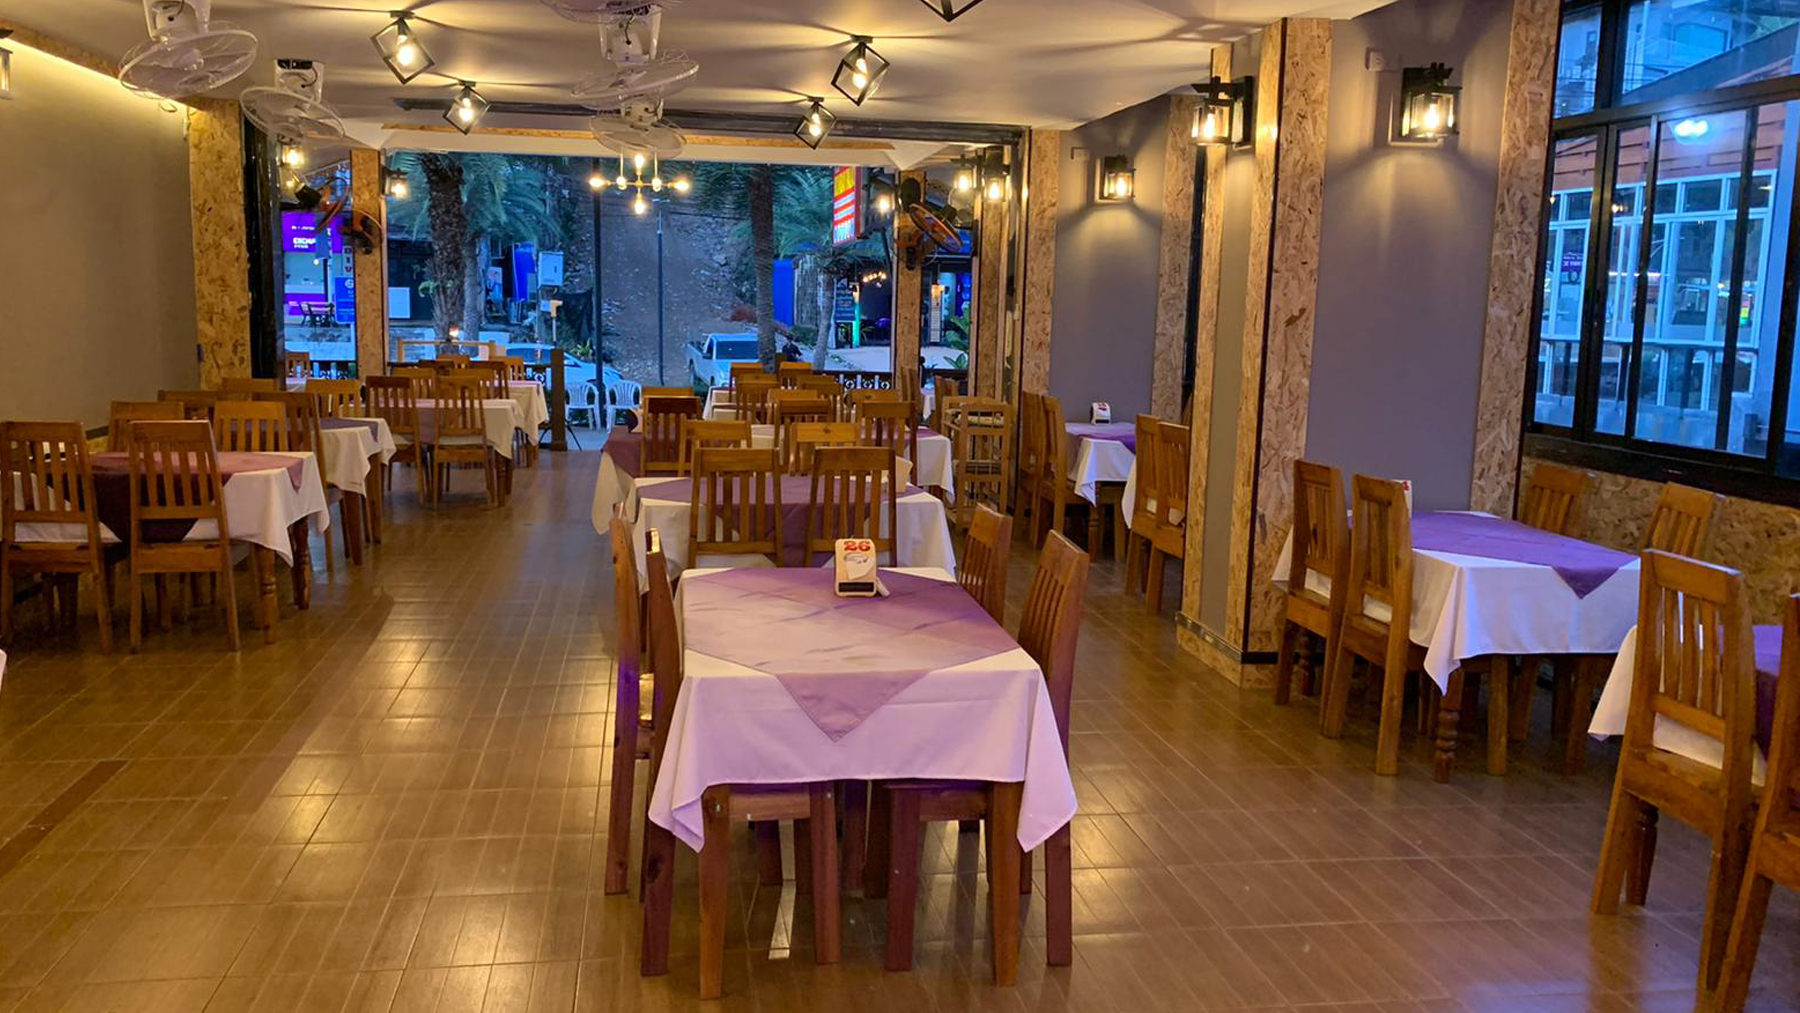 Bombay Palace Restaurant in Ao nang Krabi